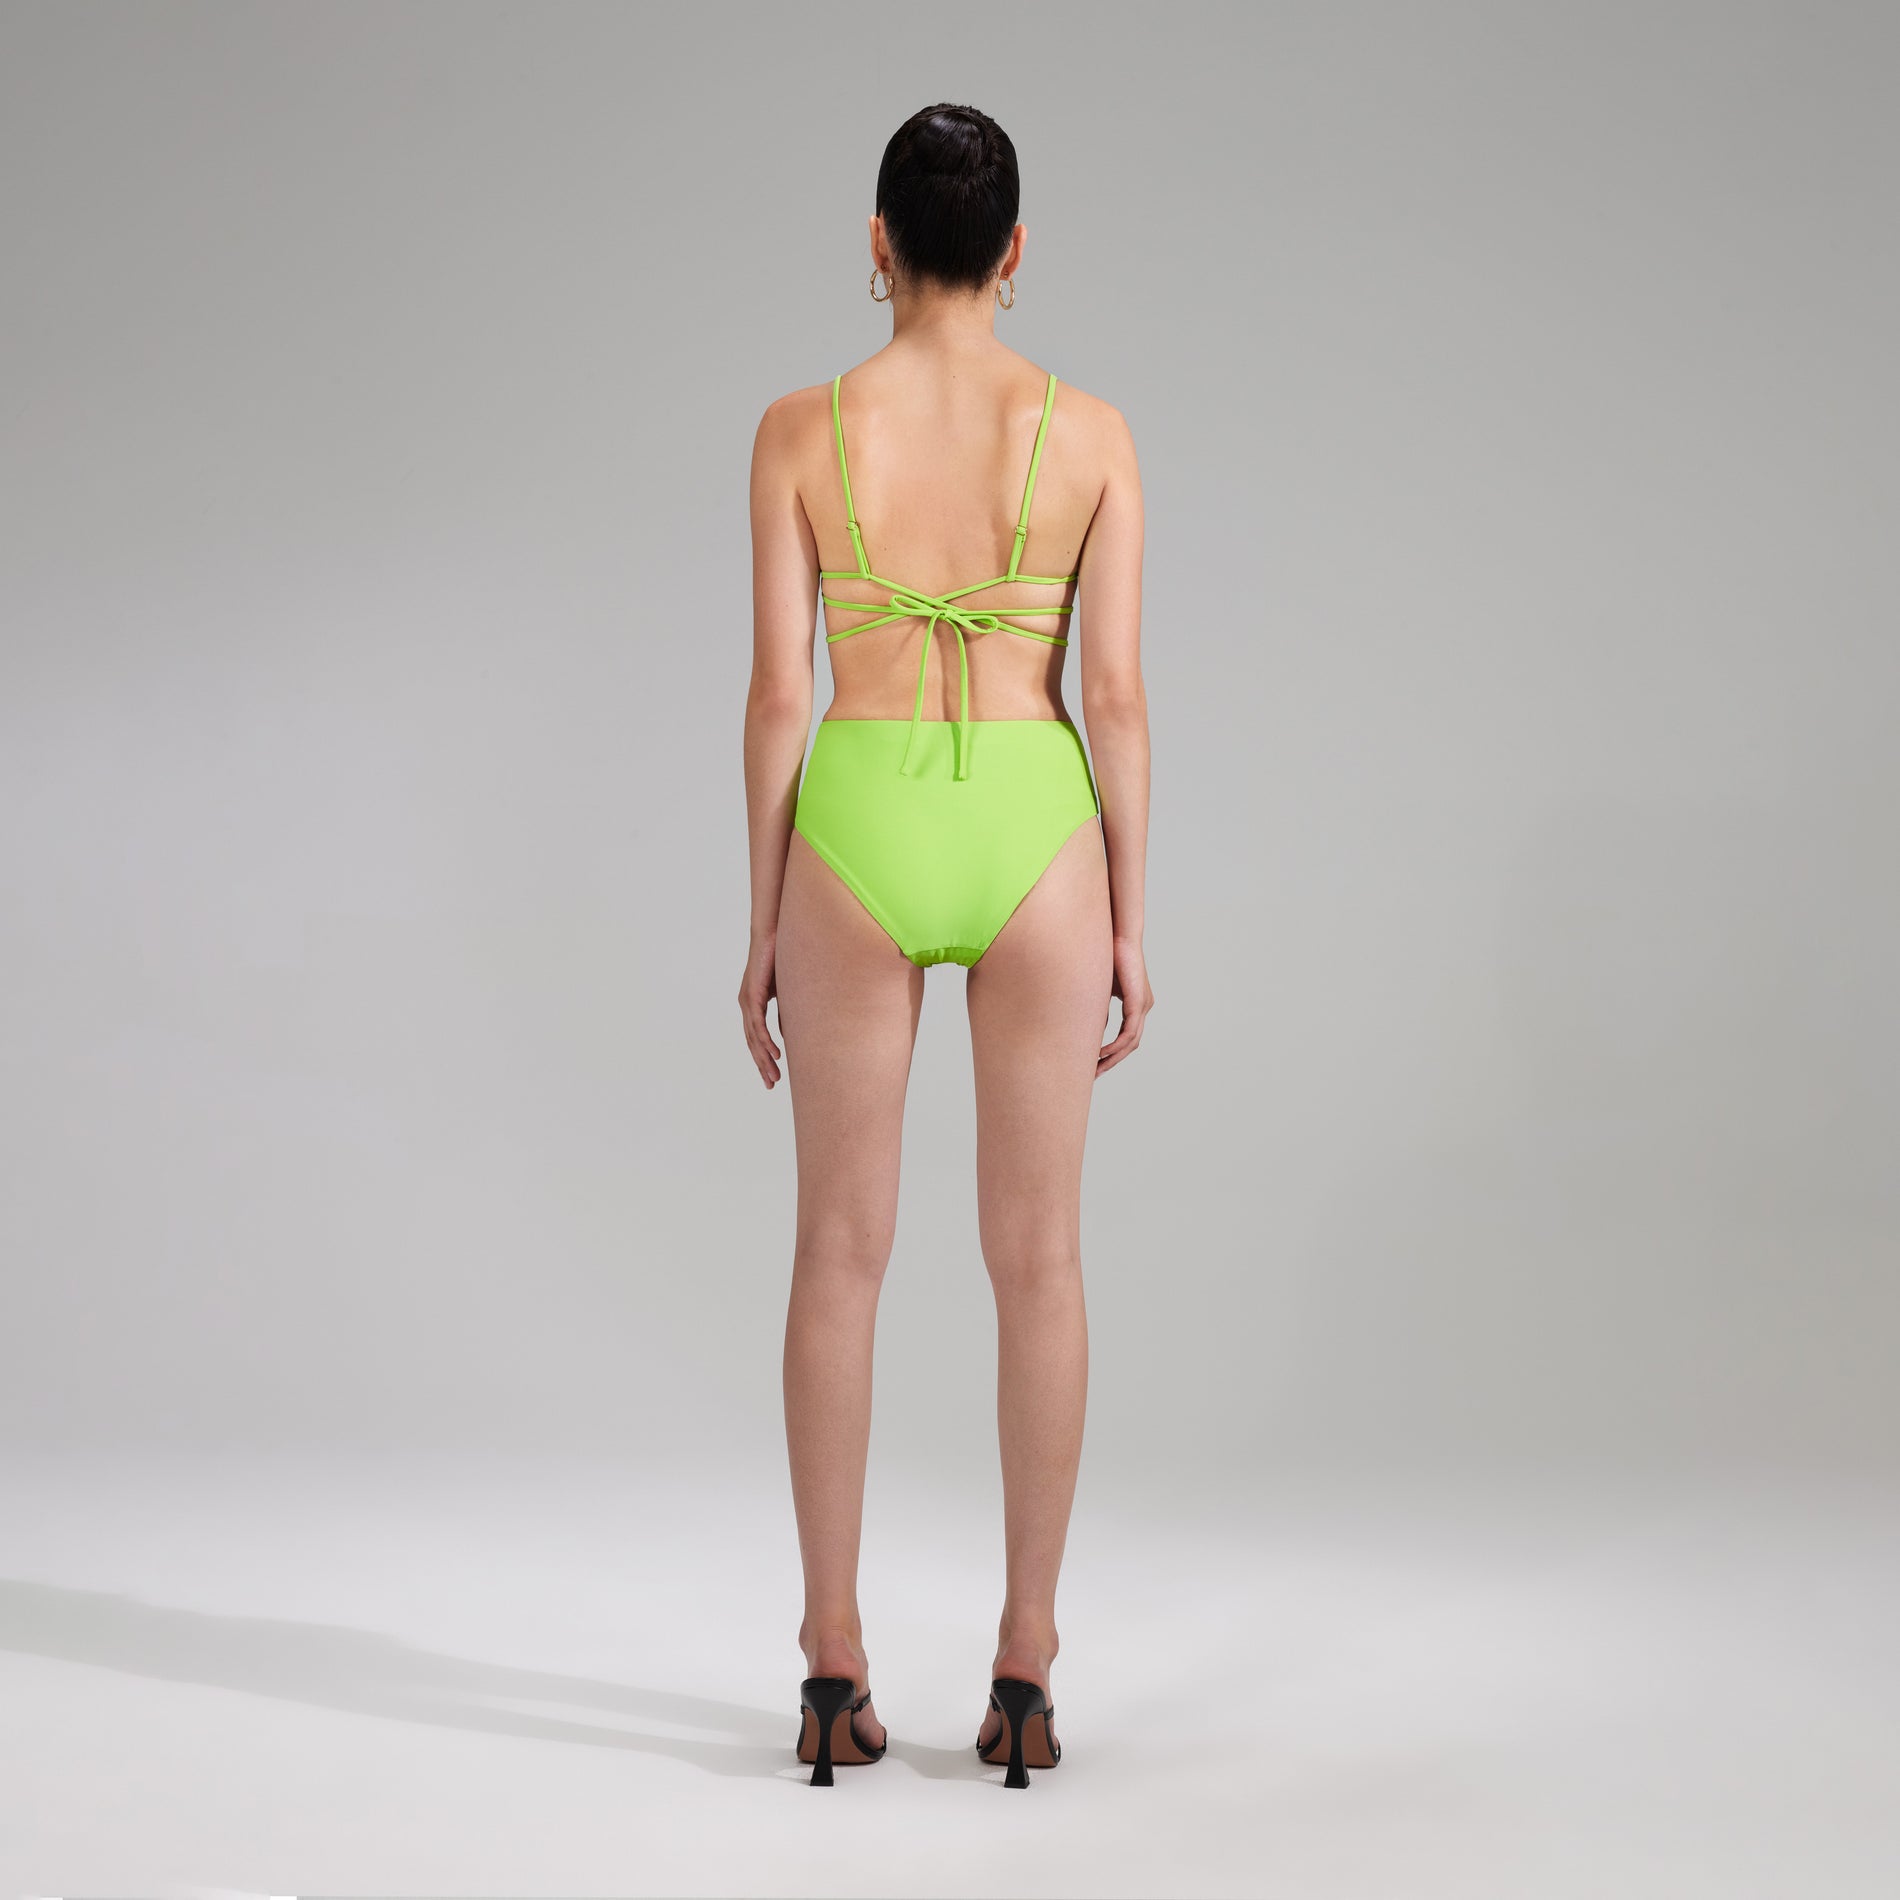 A woman wearing the Green High Waisted Bikini Brief